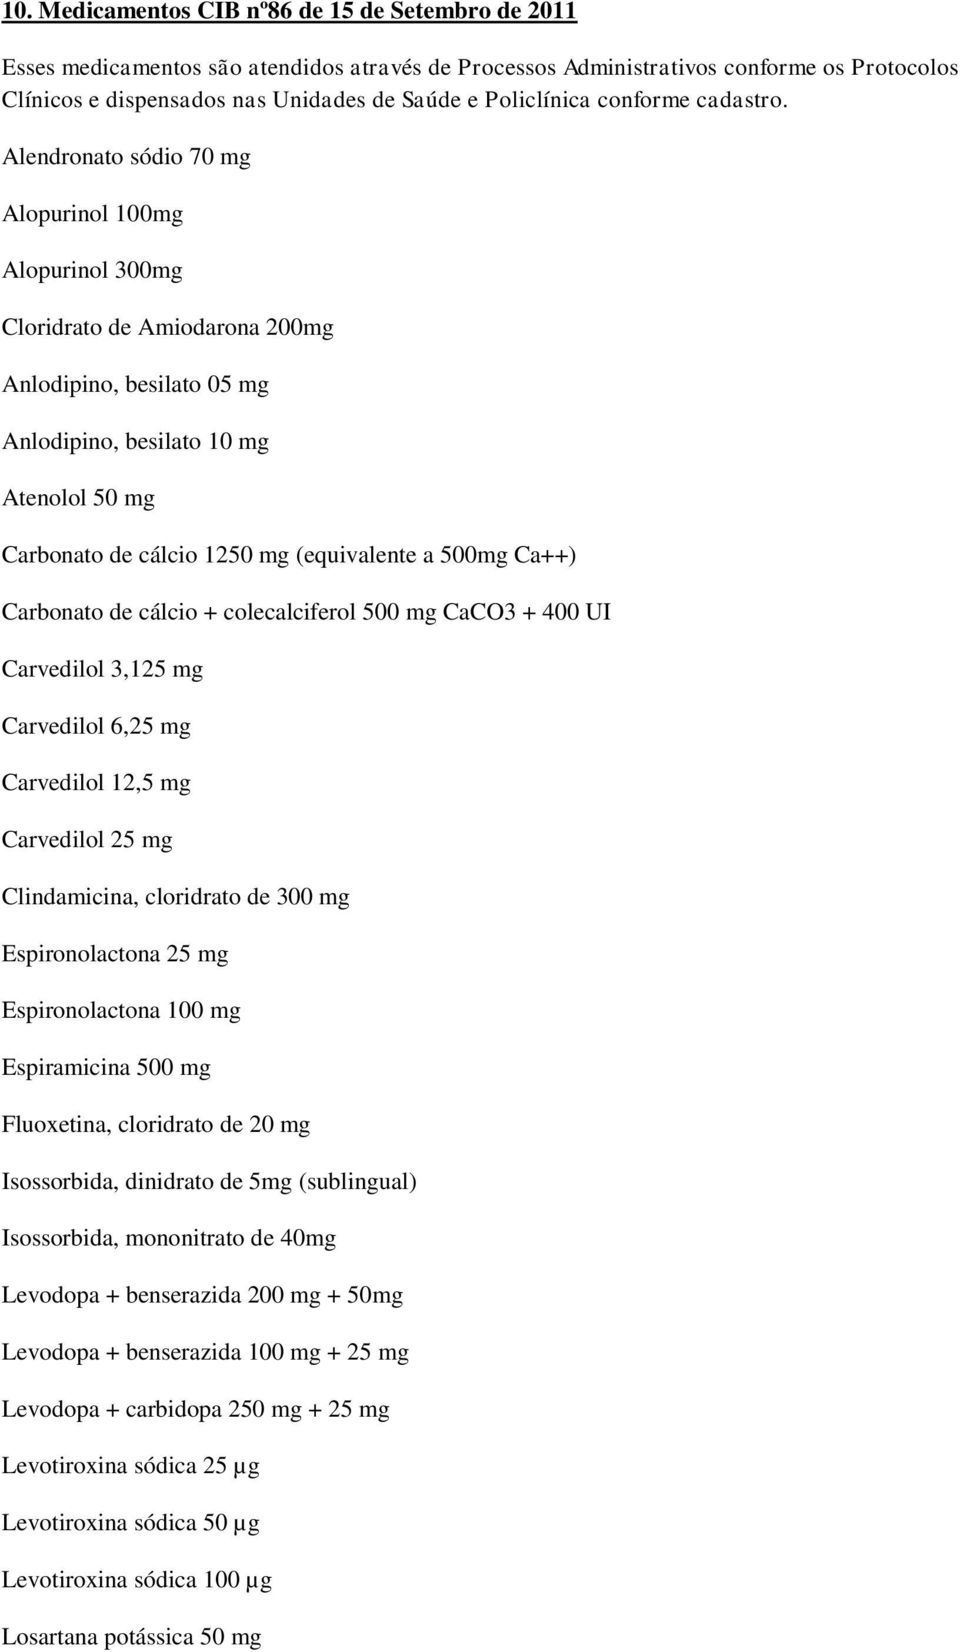 Alendronato sódio 70 mg Alopurinol 100mg Alopurinol 300mg Cloridrato de Amiodarona 200mg Anlodipino, besilato 05 mg Anlodipino, besilato 10 mg Atenolol 50 mg Carbonato de cálcio 1250 mg (equivalente